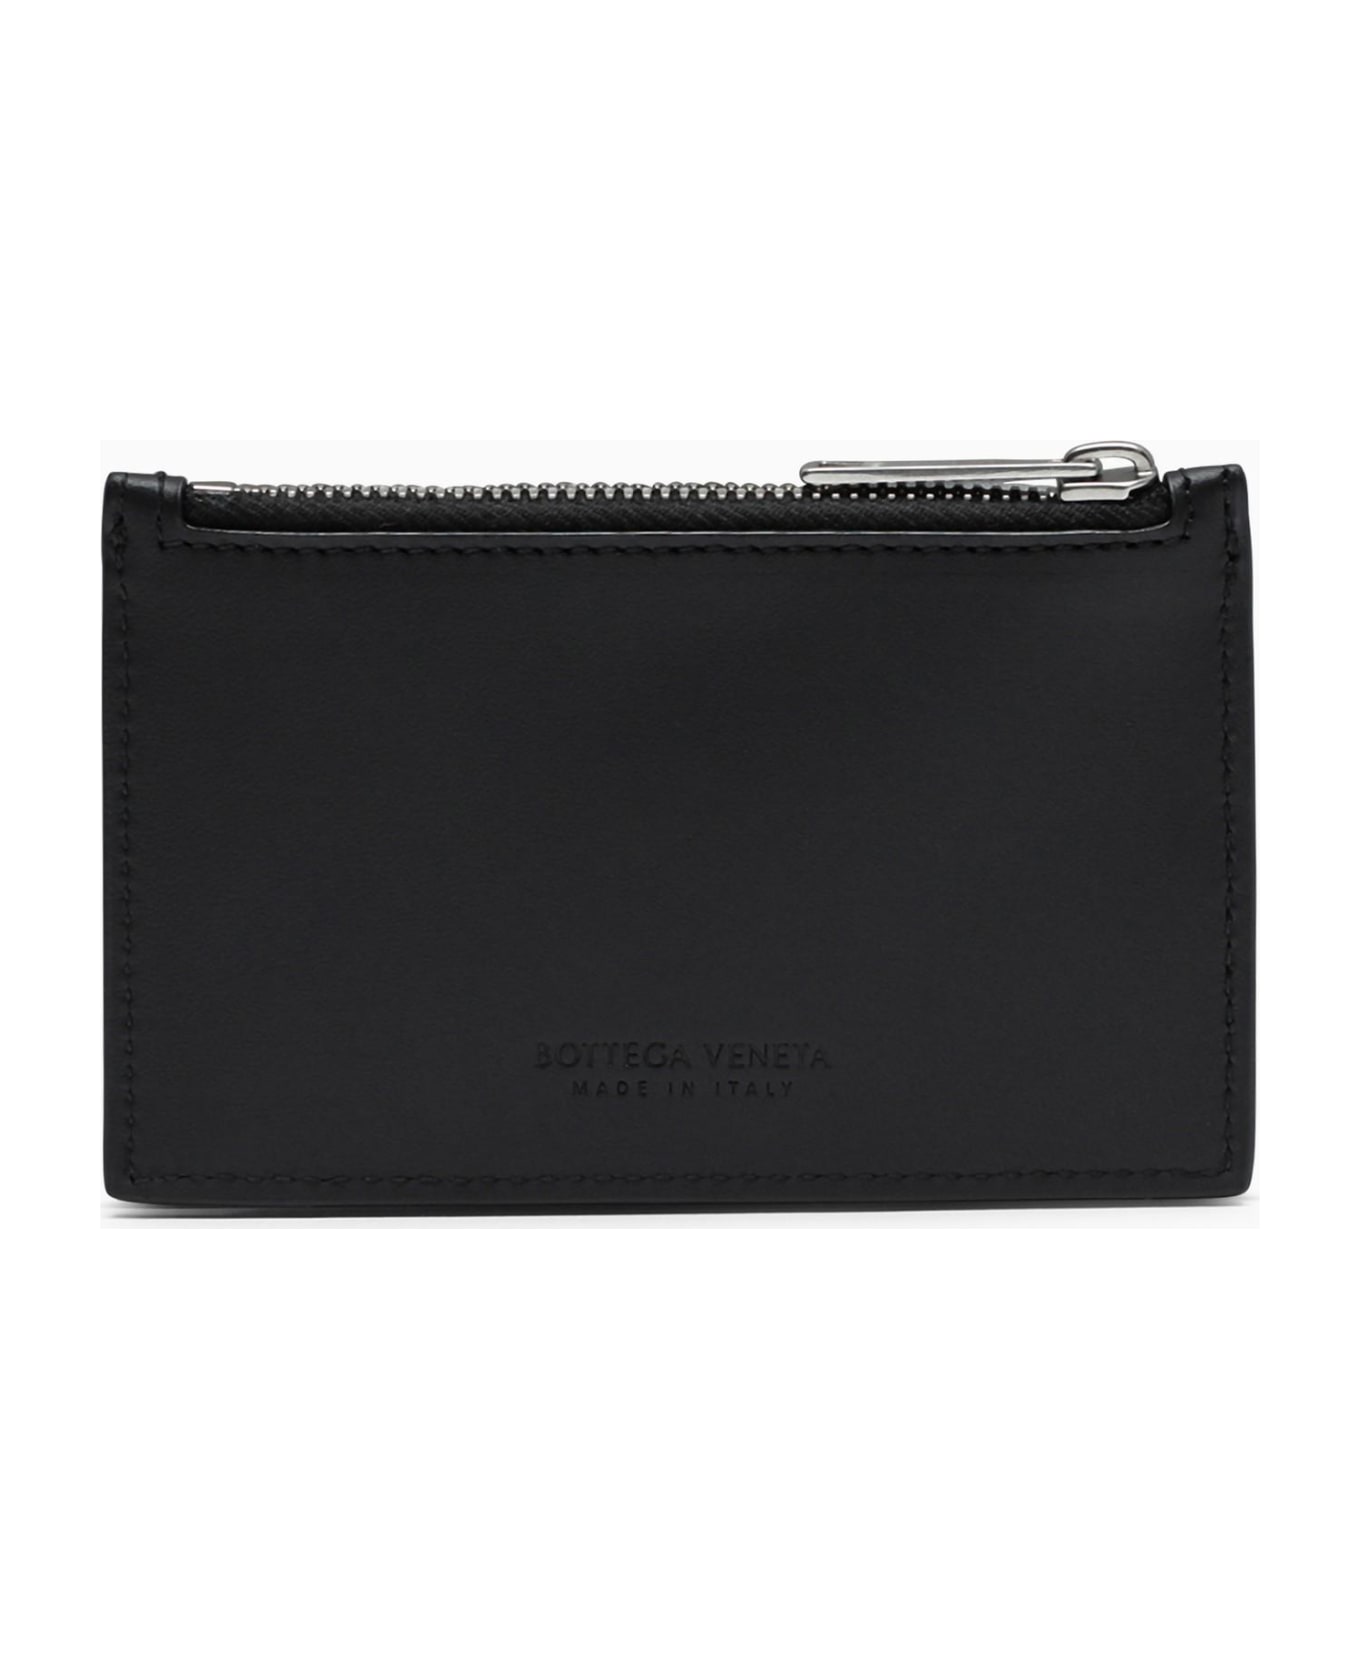 Bottega Veneta Zip Credit Card Holder - Black-silver